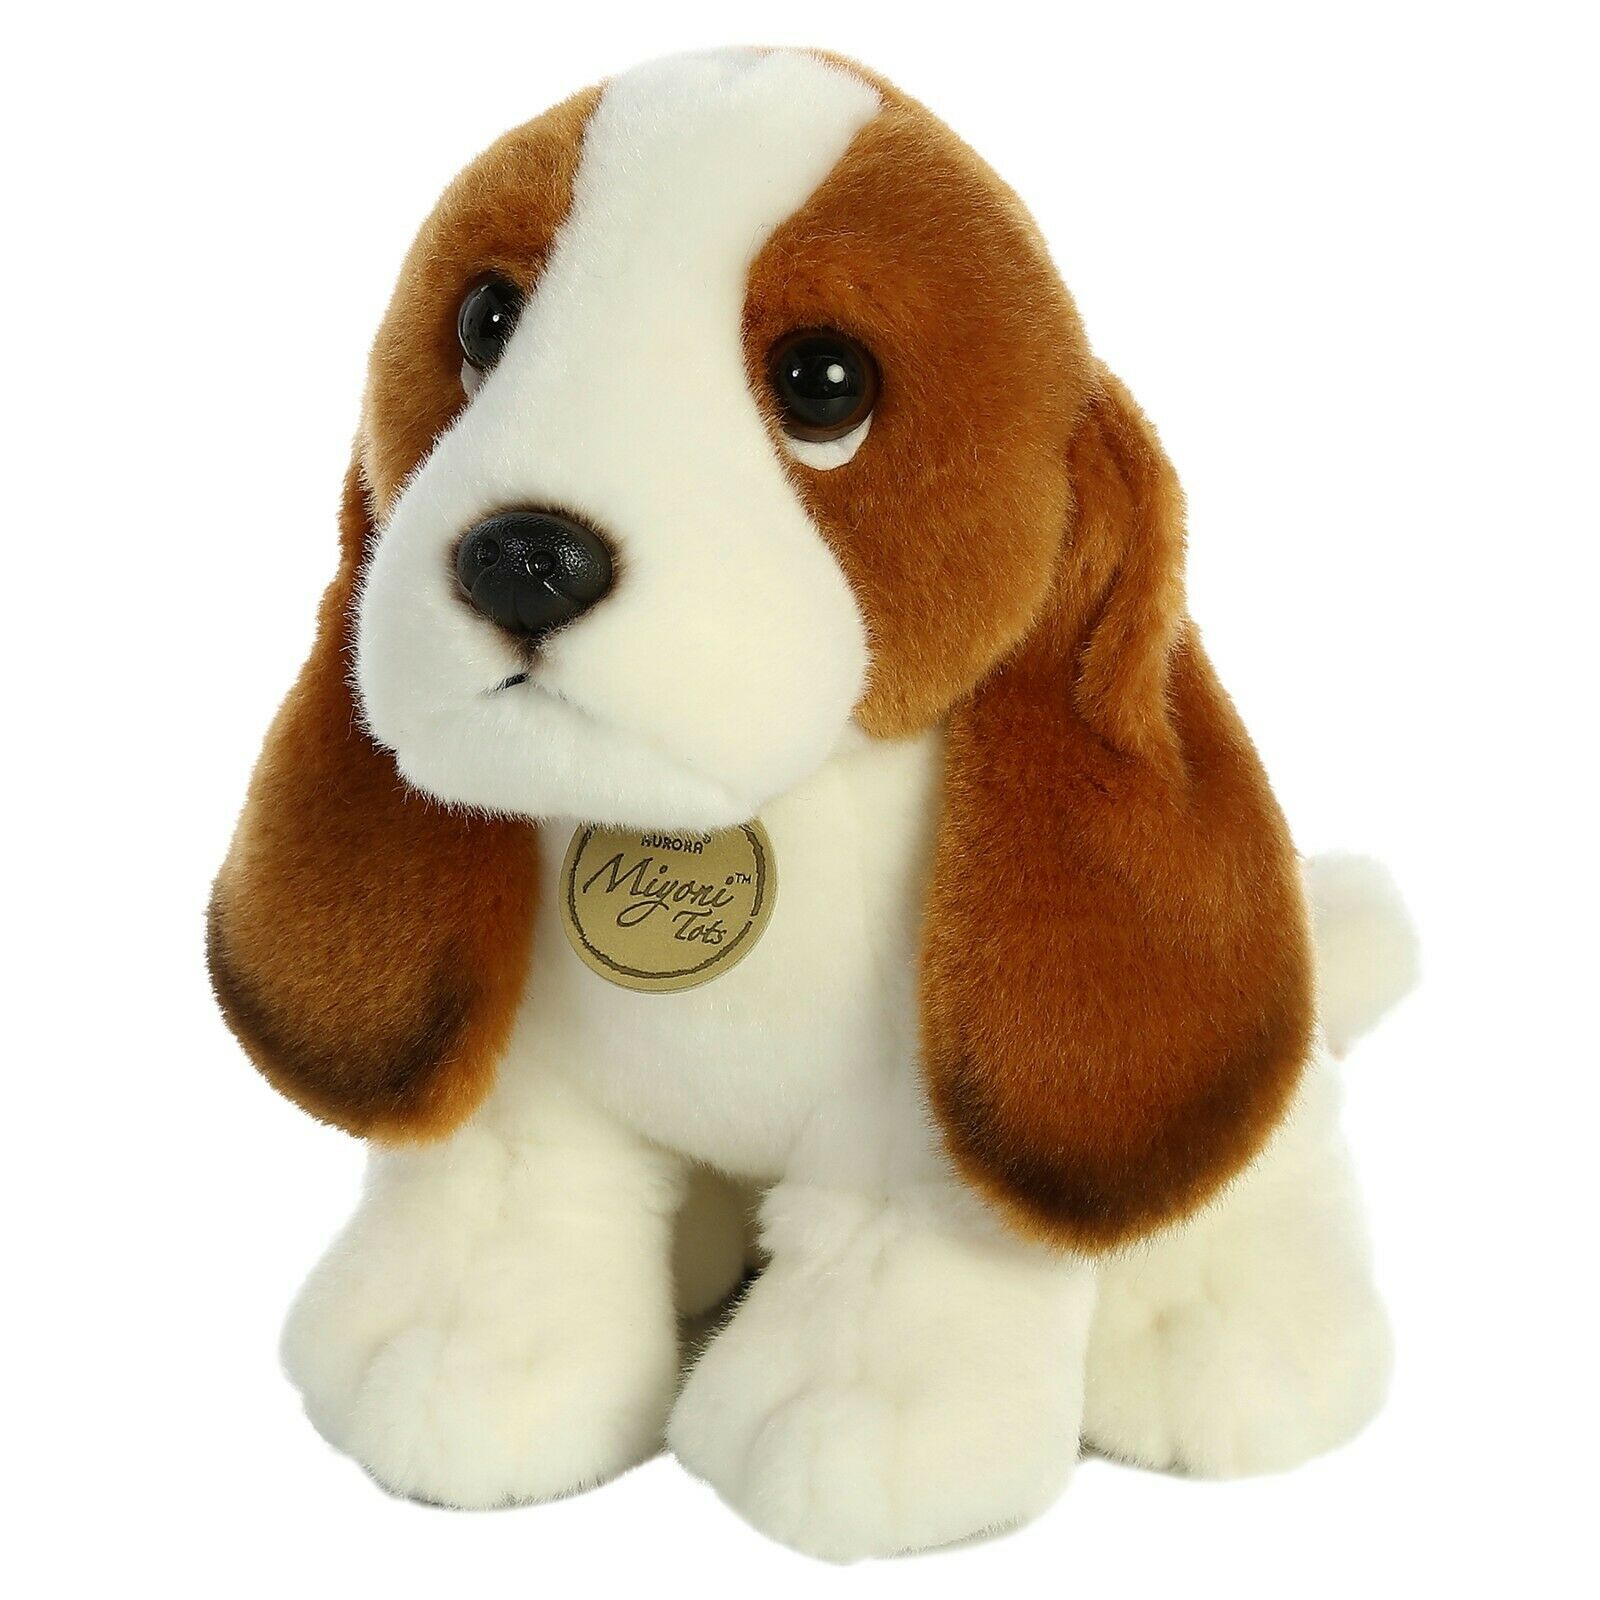 Themogan 11" Basset Hound France Puppy Dog Pet Soft Plush Stuffed Animal Toy Ivo